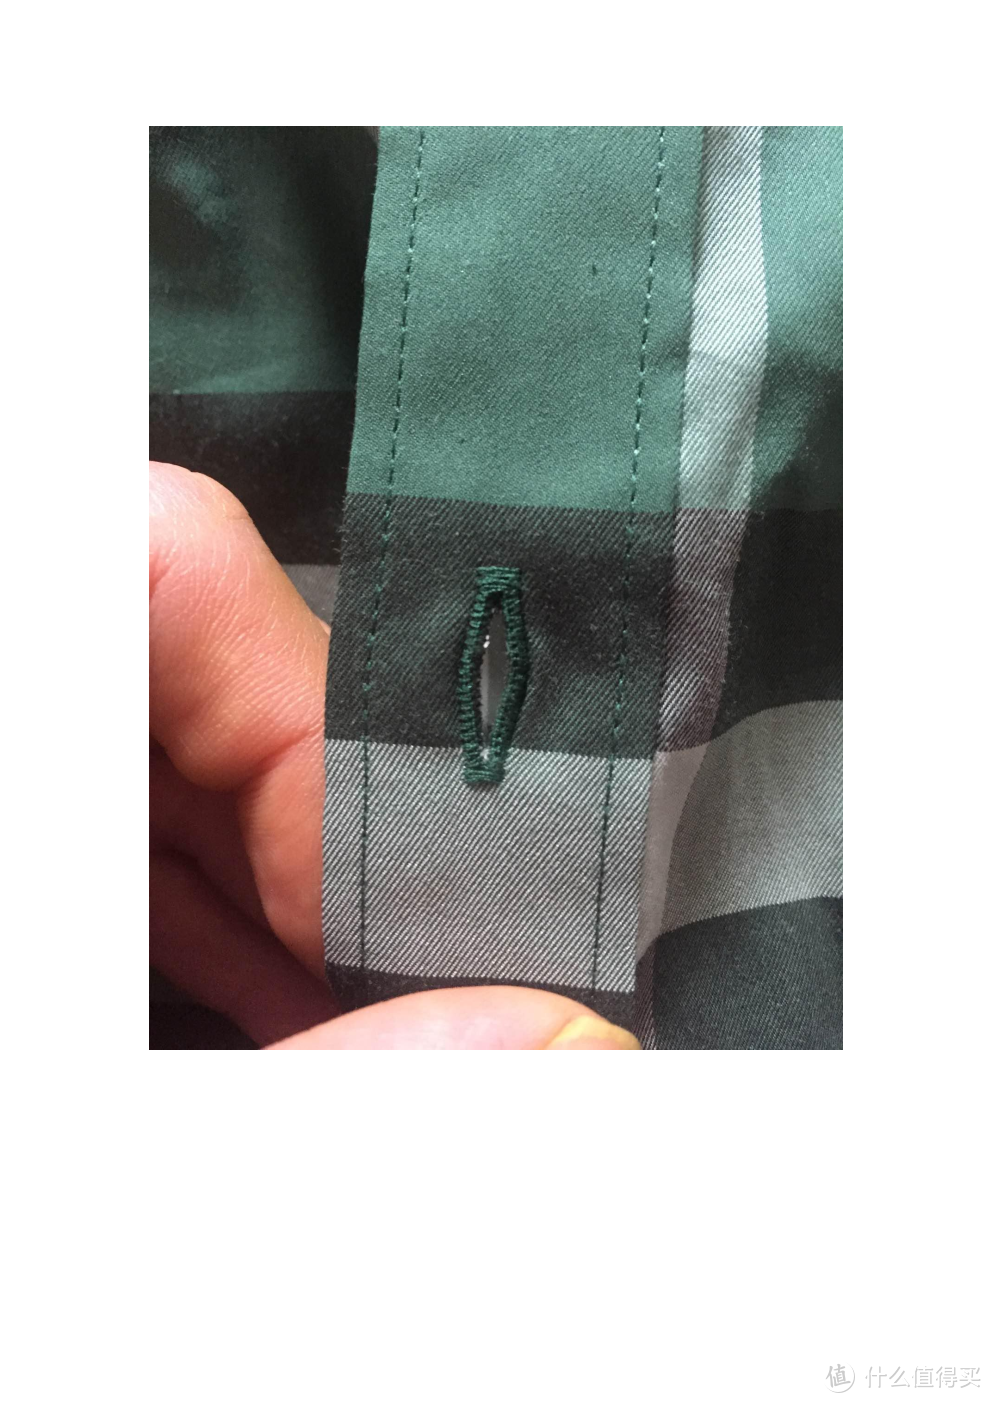 Detail | Burberry 鉴定真假 ——衬衫篇 2